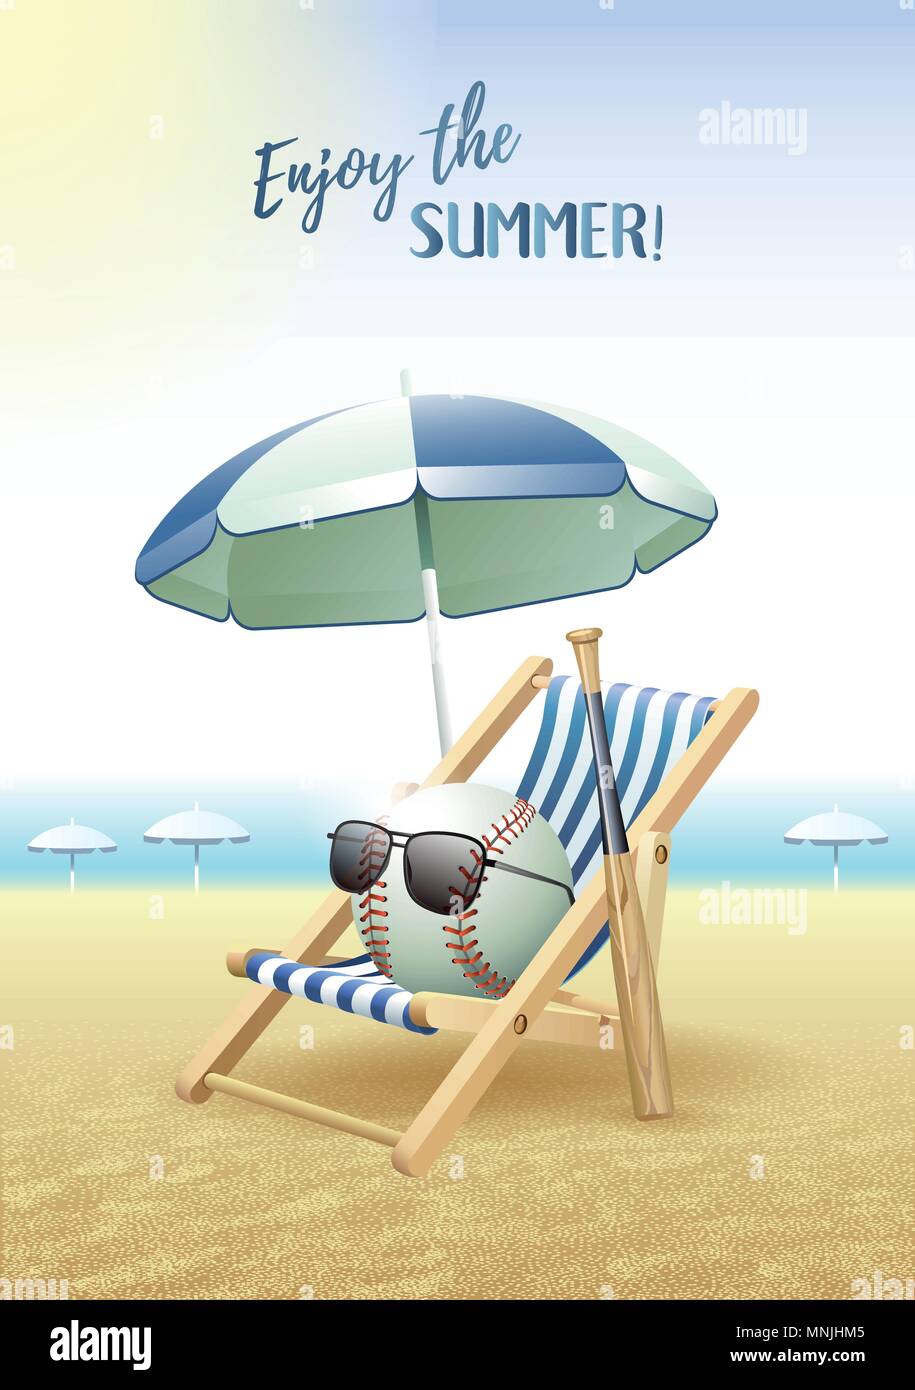 Enjoy the Summer! Sports card. Baseball ball with sunglasses, beach umbrella, deck chair and wooden bat on the sand beach. Vector illustration. Stock Vector